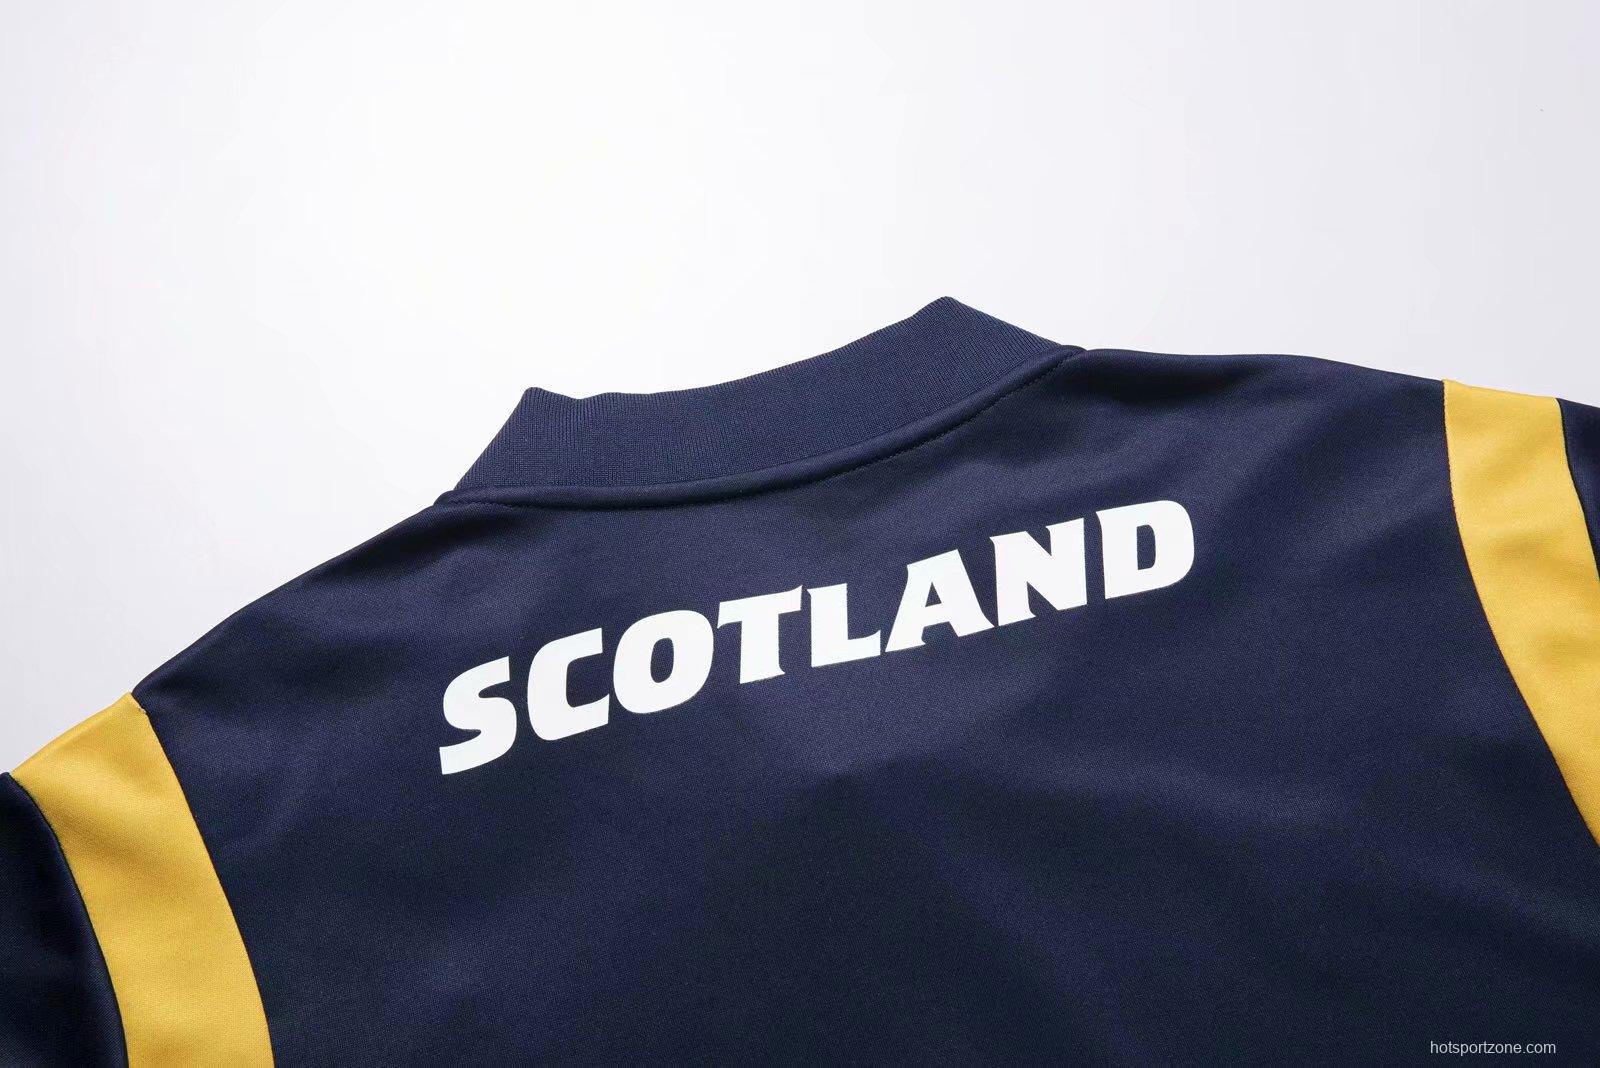 Scotland 2020-2021 Mens Rugby Anthem Jacket